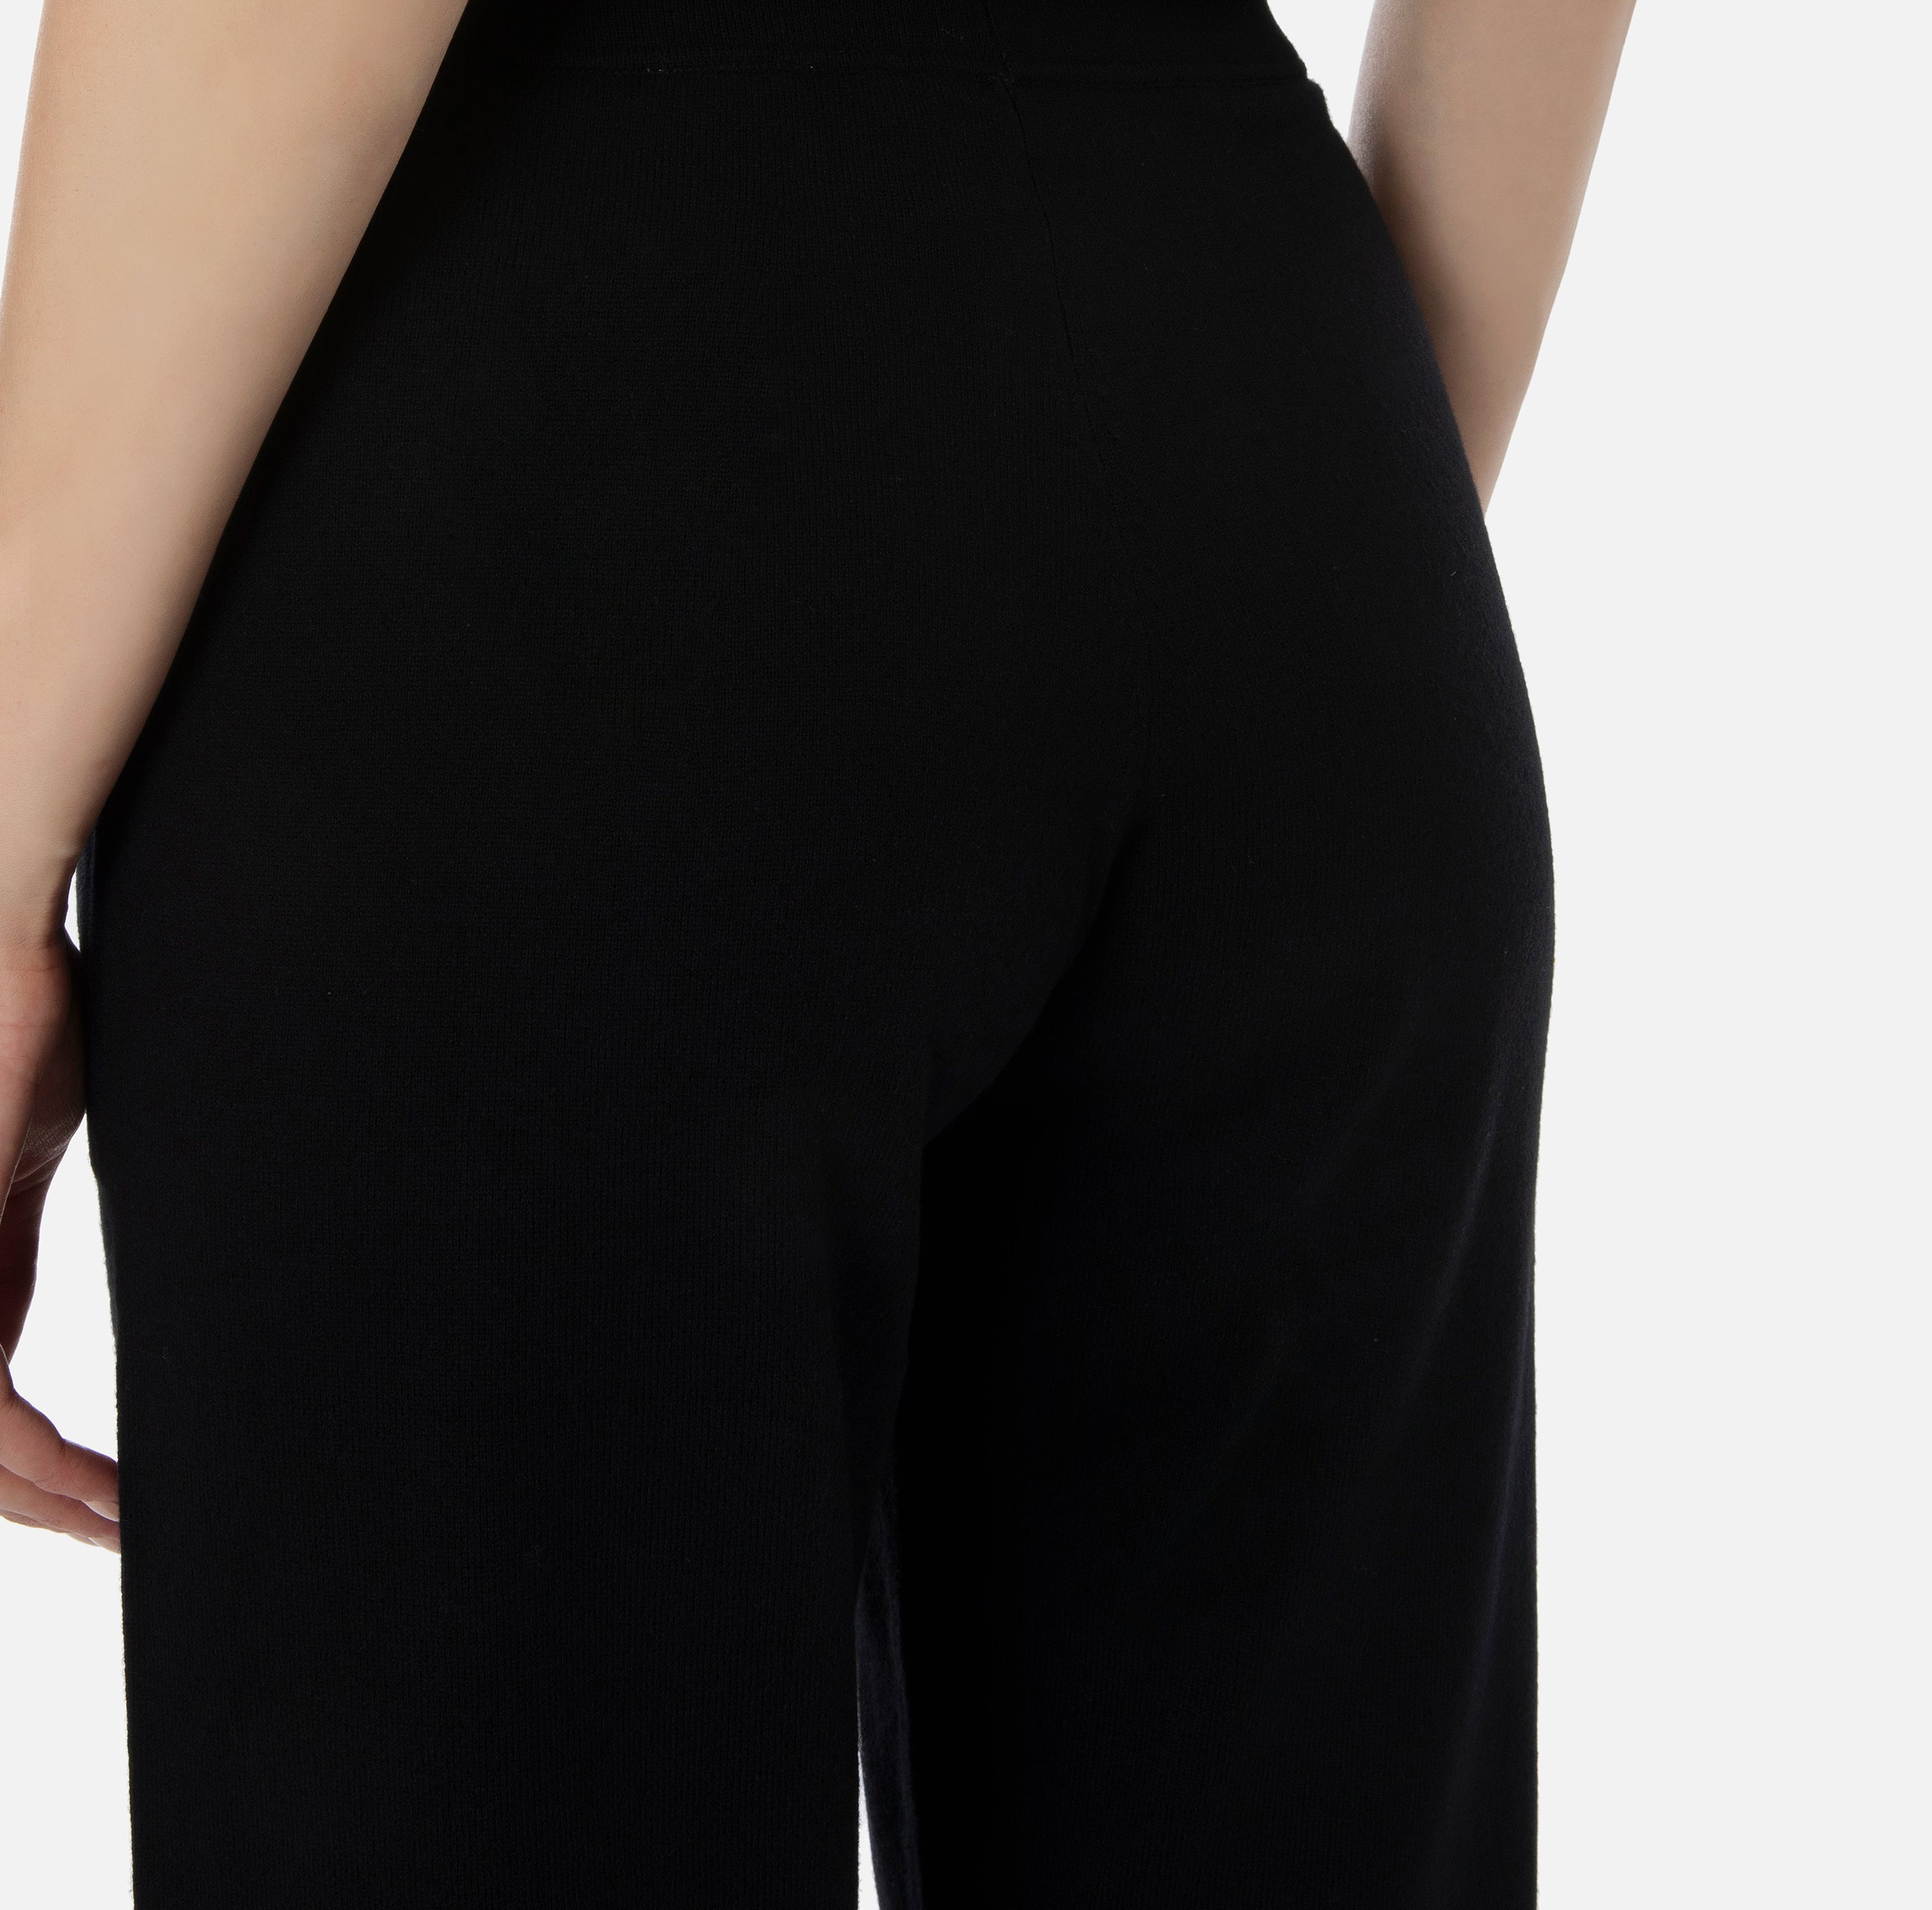 Elisabetta Franchi Women's Trousers KP49S37E2 Black